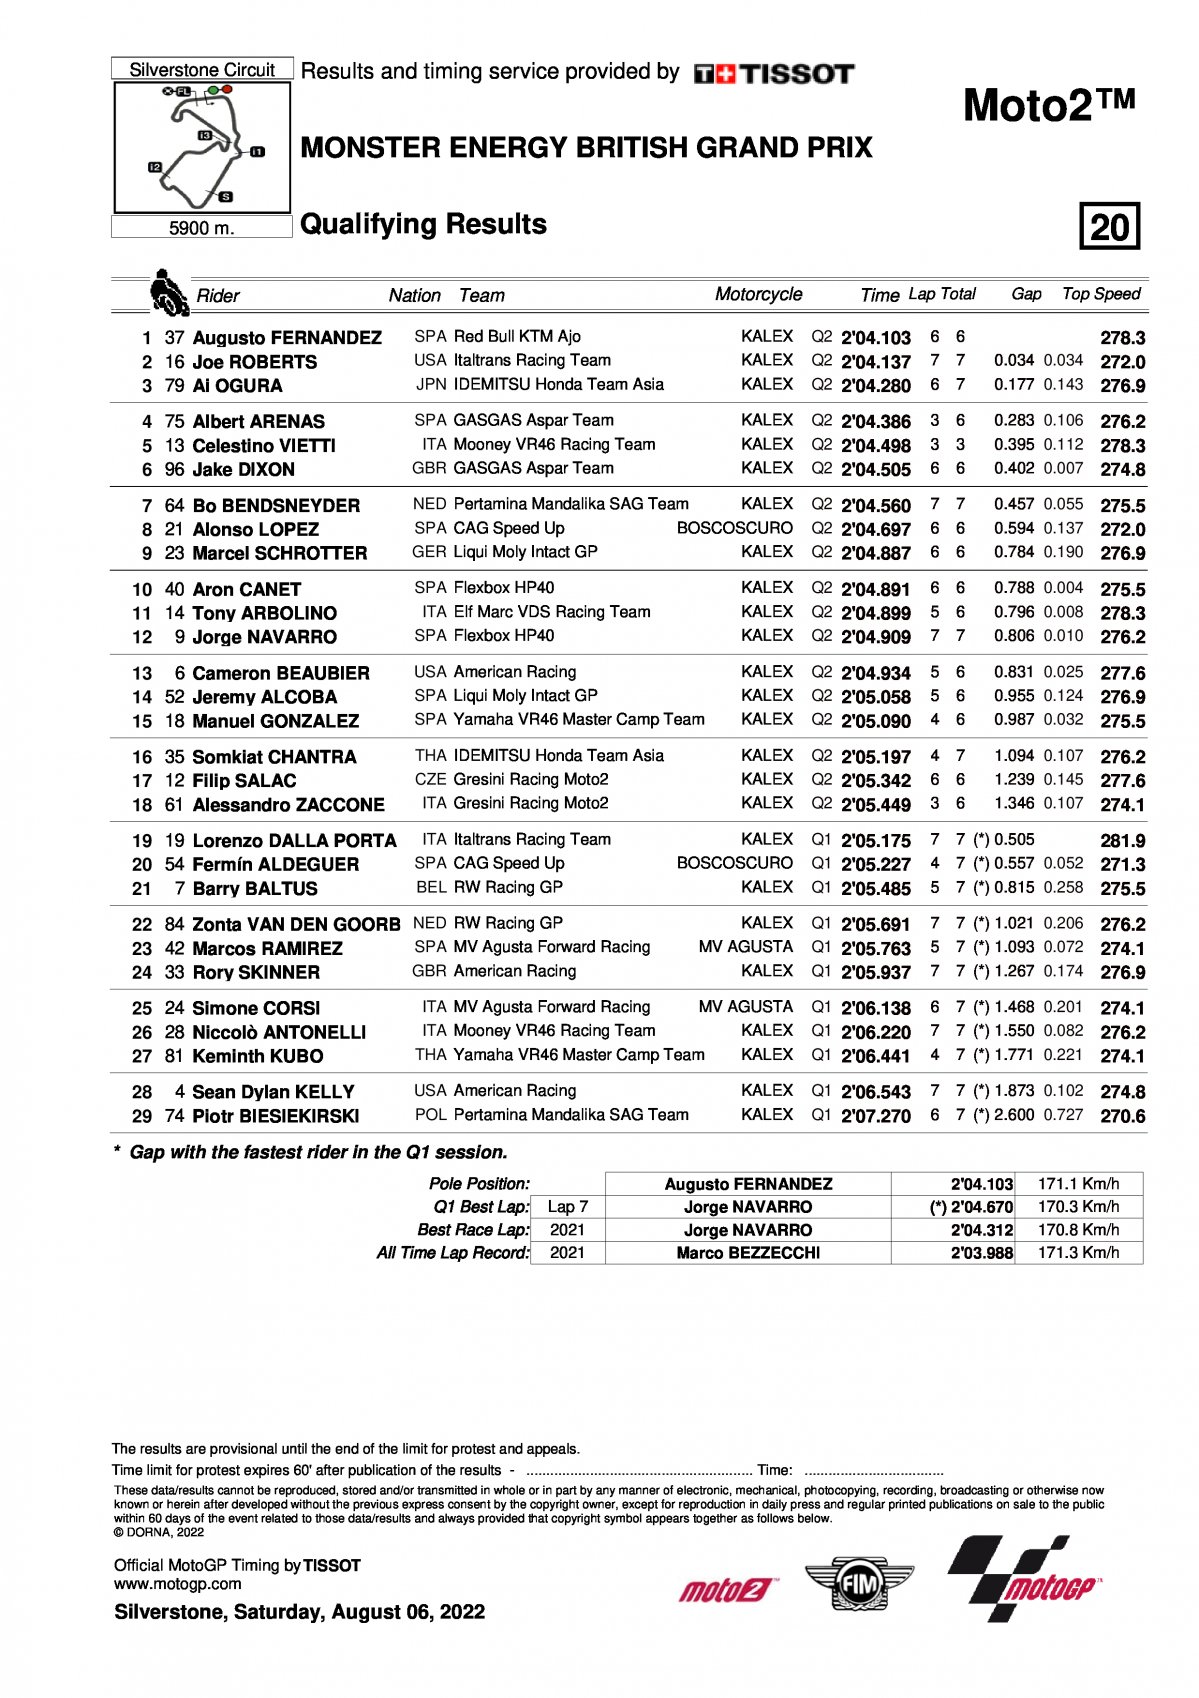 Результаты квалификации BritishGP Moto2, Silverstone (6/08/2022)